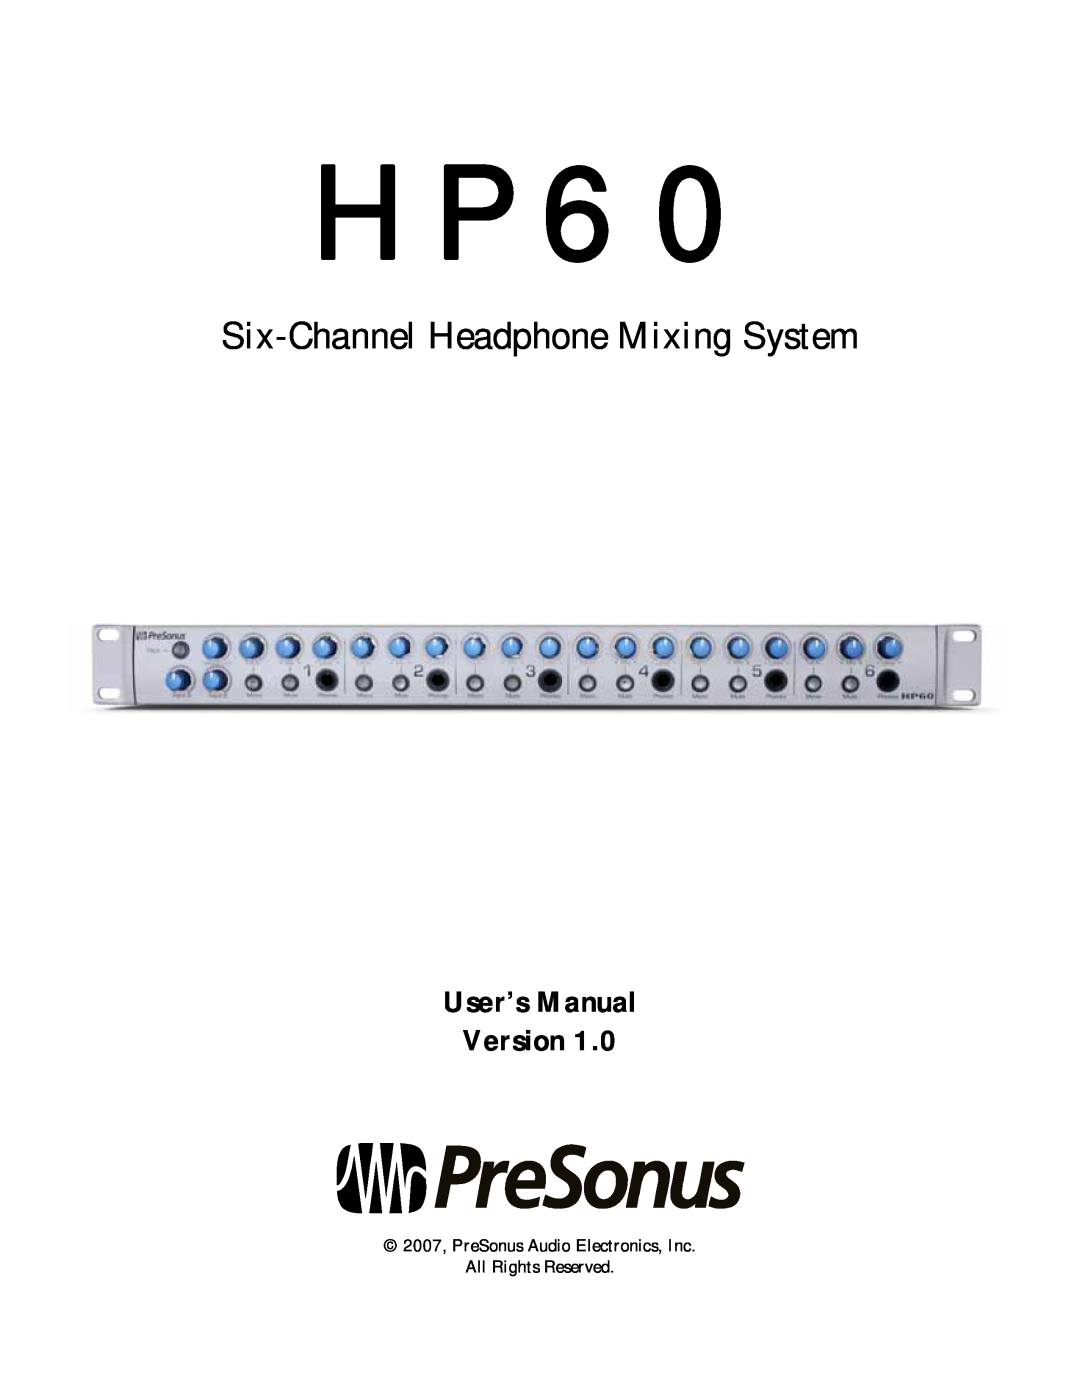 Presonus Audio electronic HP60 manual HPP6600, Six-ChannelHeadphone Mixing System, 2007, PreSonus Audio Electronics, Inc 